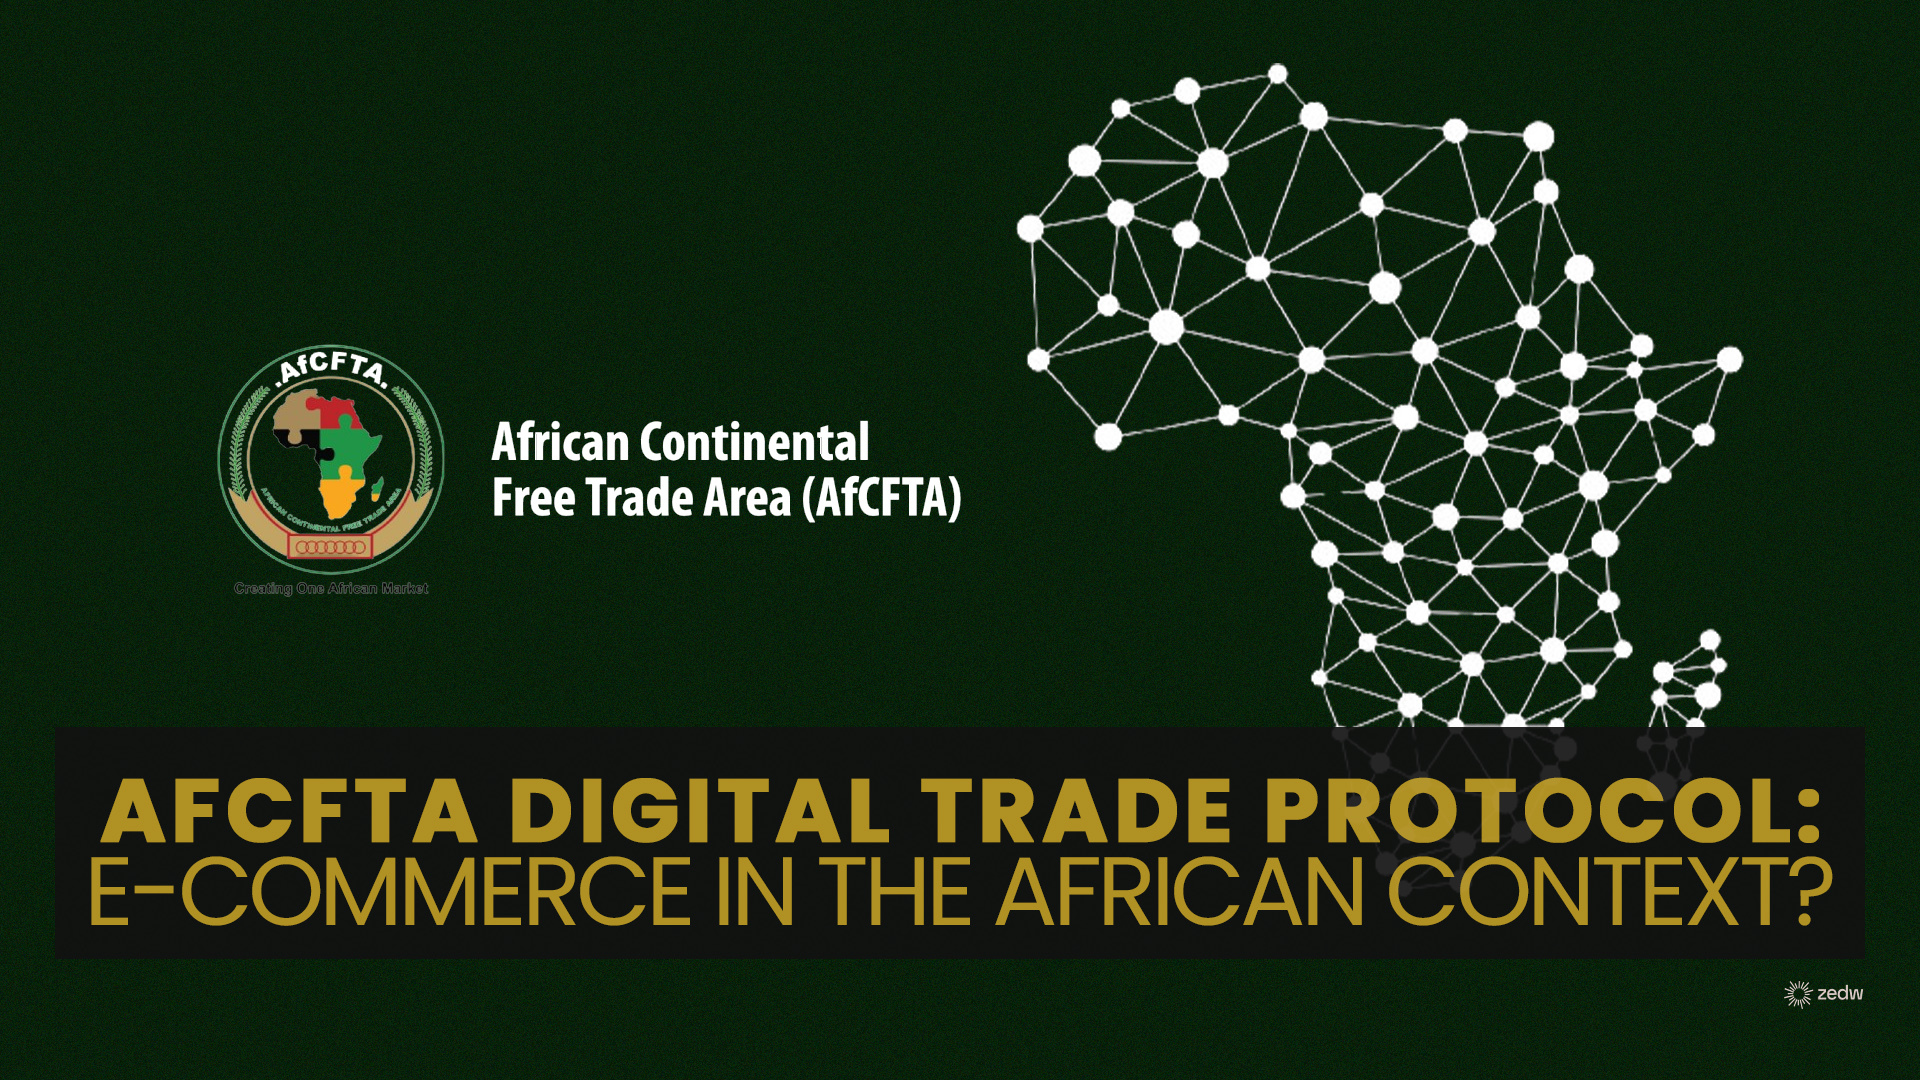 Afcfta Digital Protocol, e-commerce Africa, Africa Continental Free Trade Area, AfCFTA